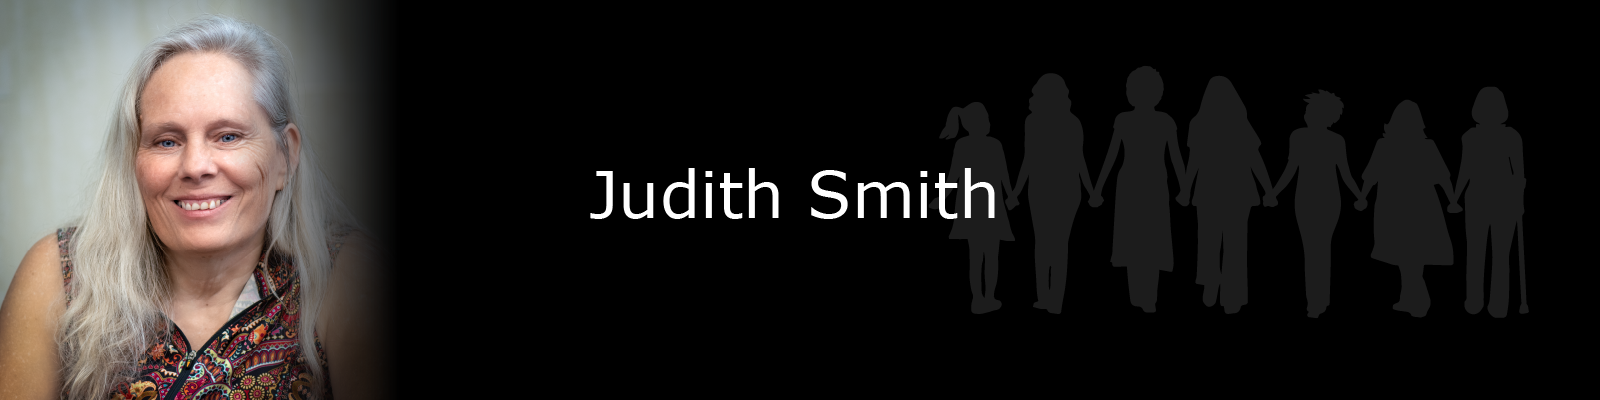 Photo of Judith Smith.